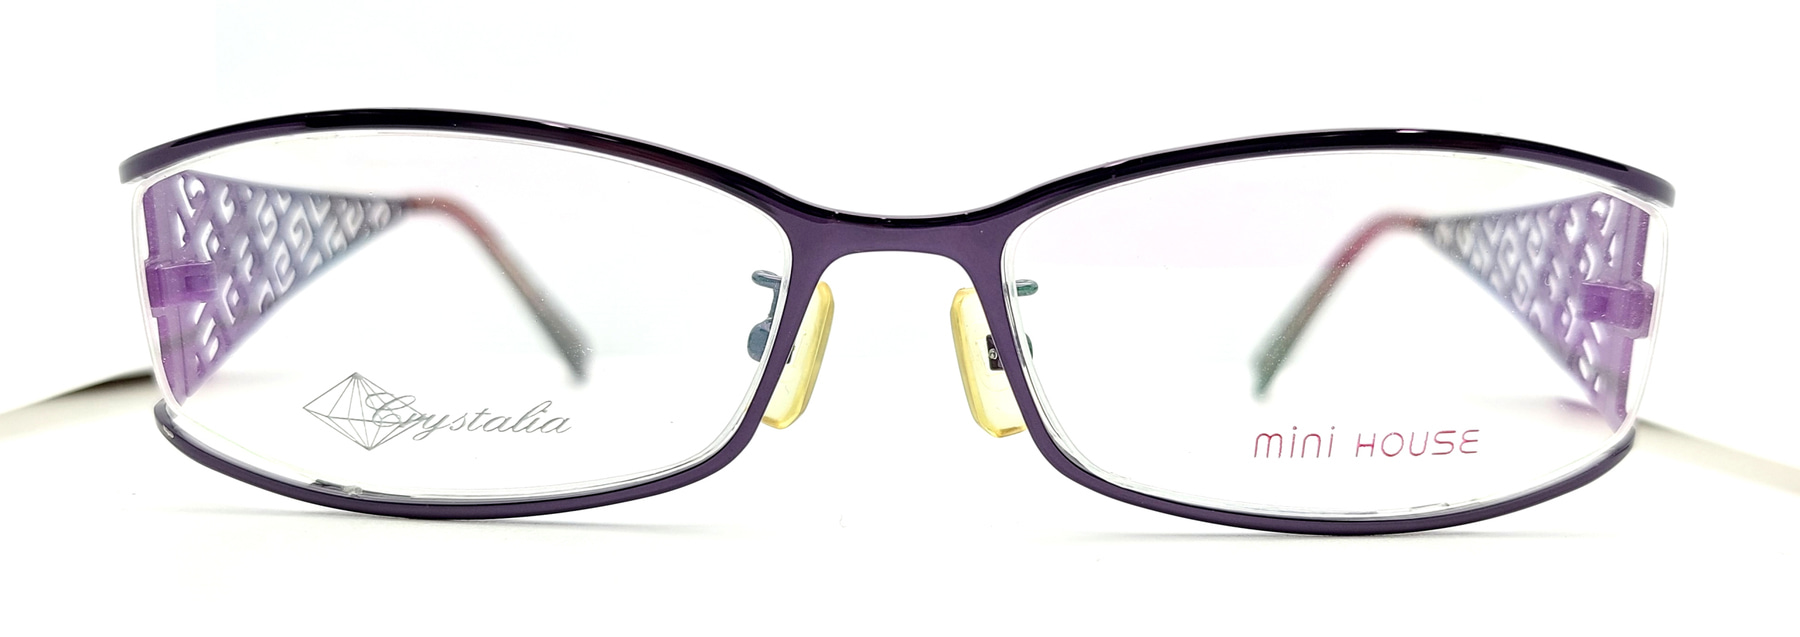 MINIHOUSE M-1019, Korean glasses, sunglasses, eyeglasses, glasses